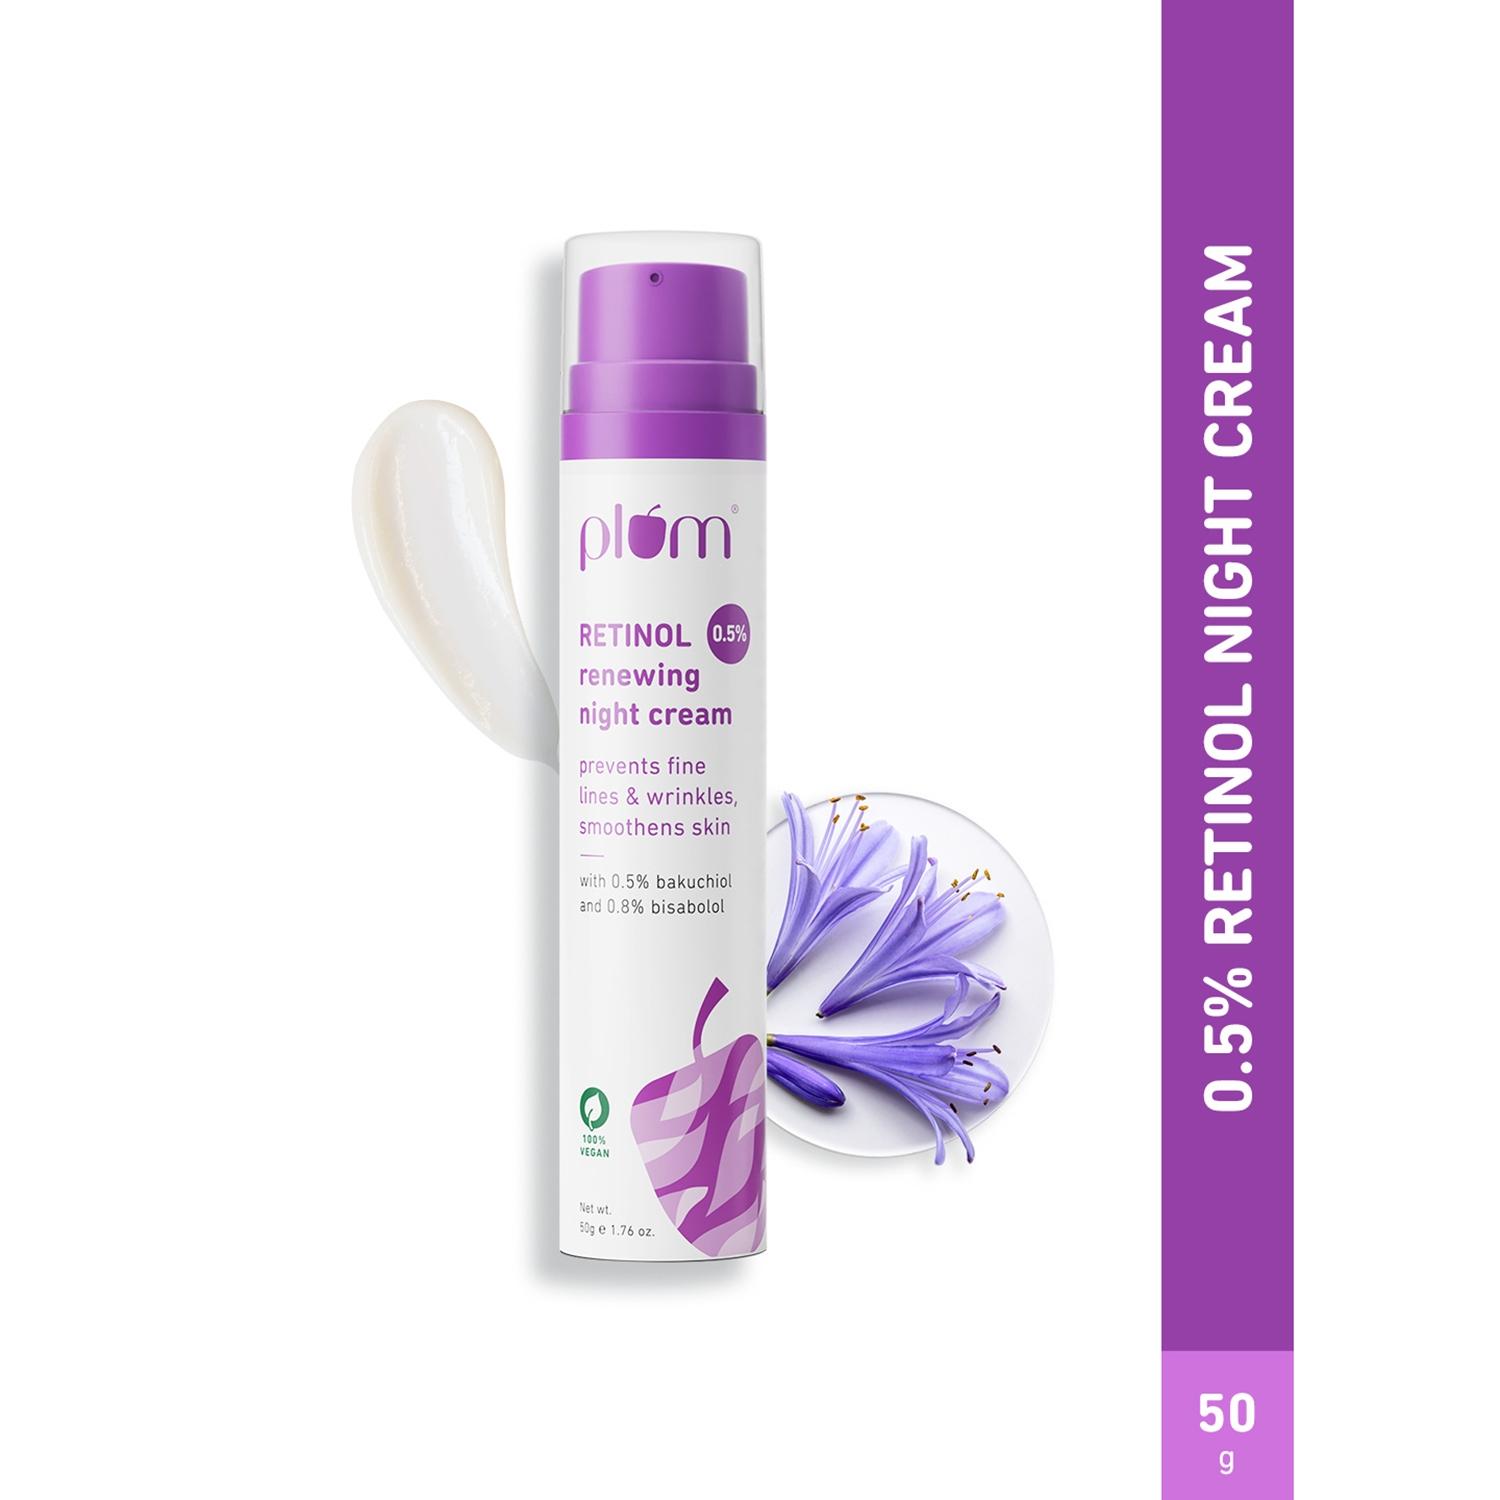 plum 0.5% retinol anti-aging night cream, boosting collagen, fighting wrinkles & fine lines (50ml)